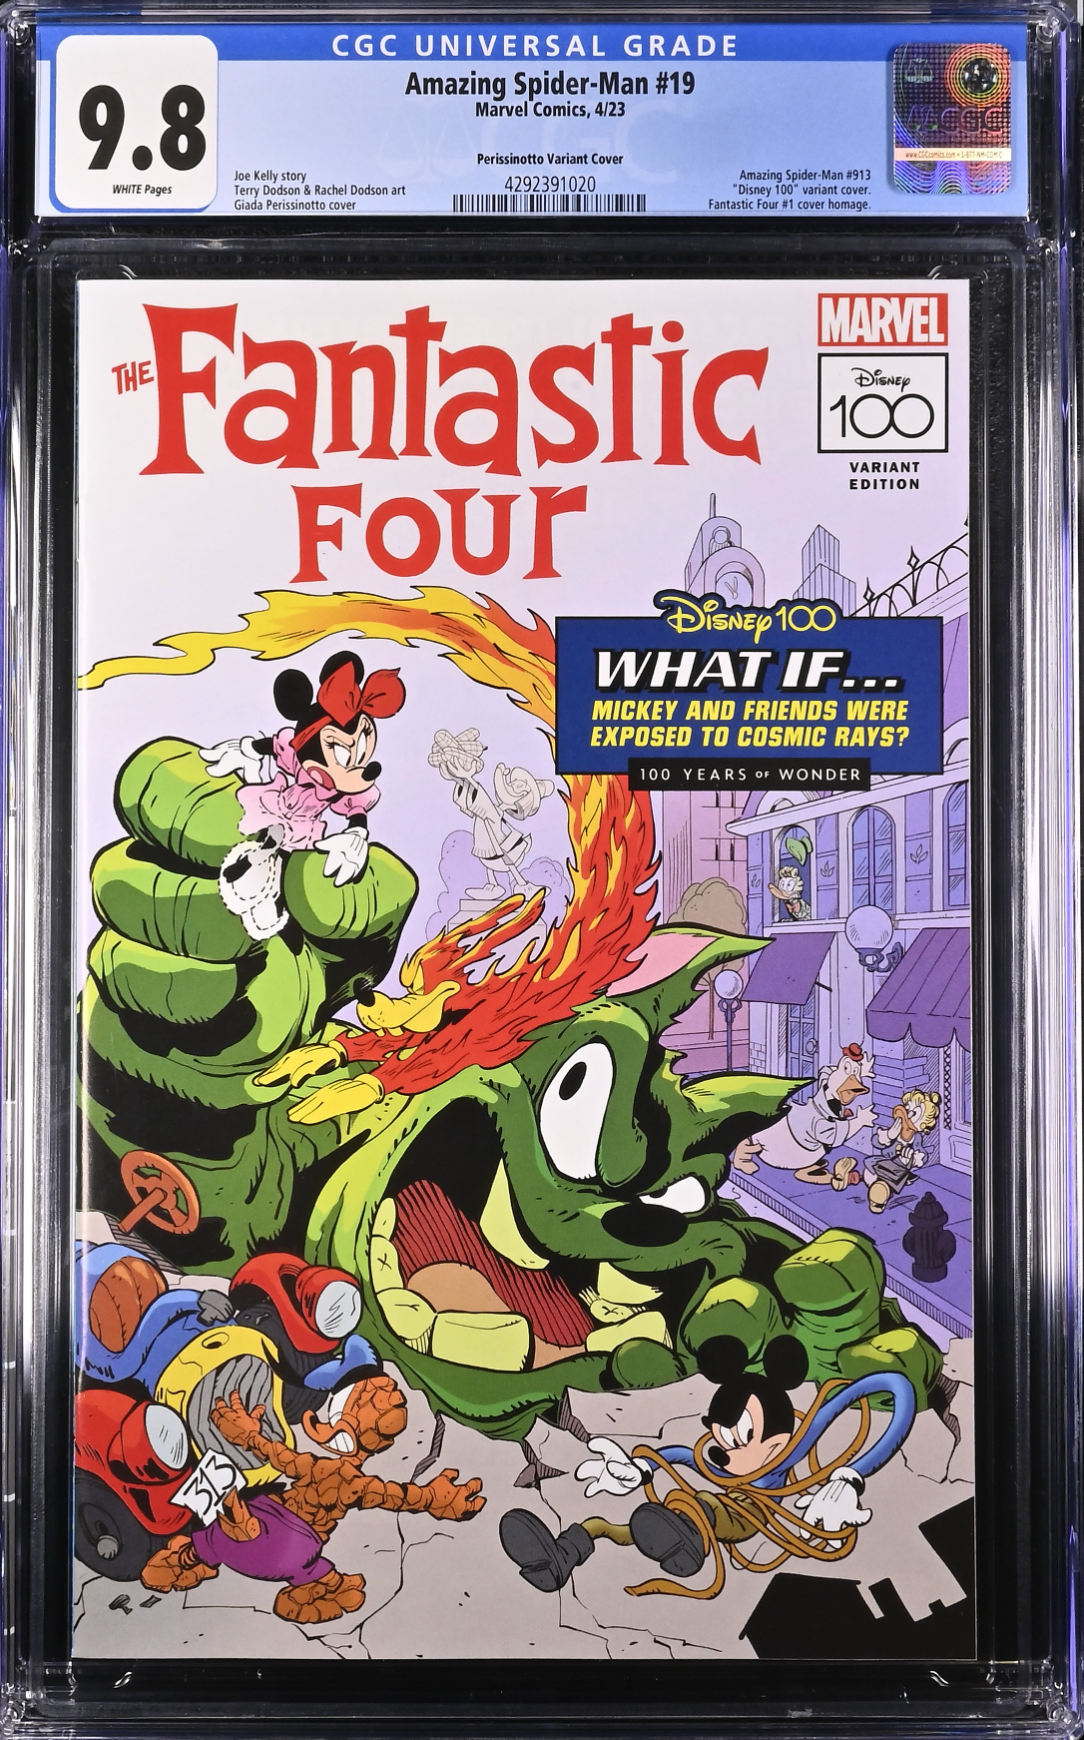 Amazing Spider-Man #19 Disney 100 Variant CGC 9.8